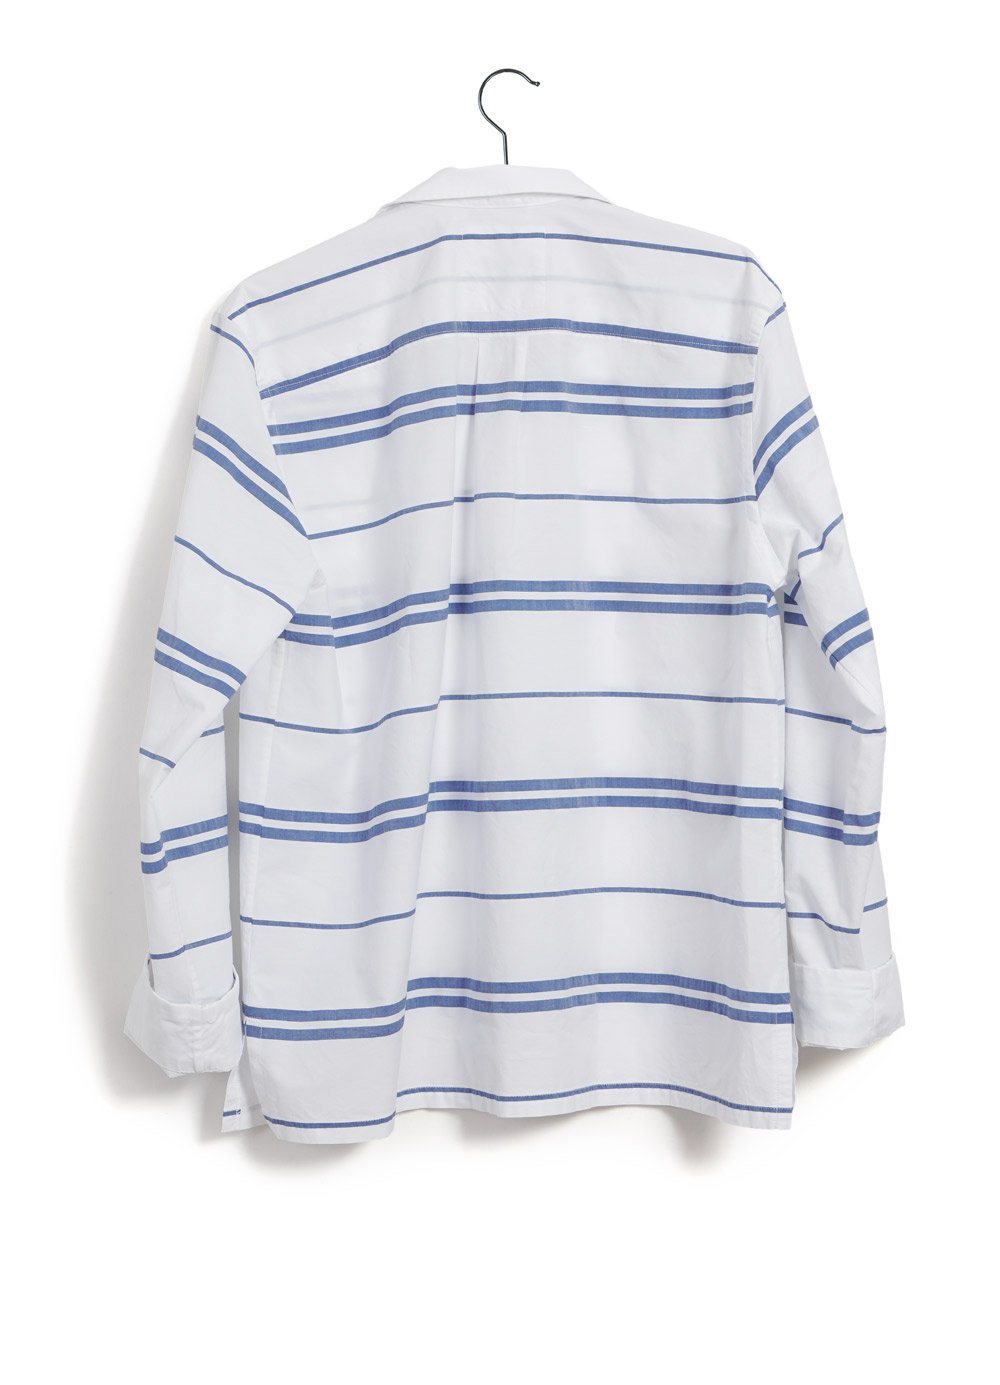 HANSEN GARMENTS - MARIUS | Casual Pull On Shirt | White Stripes - HANSEN Garments